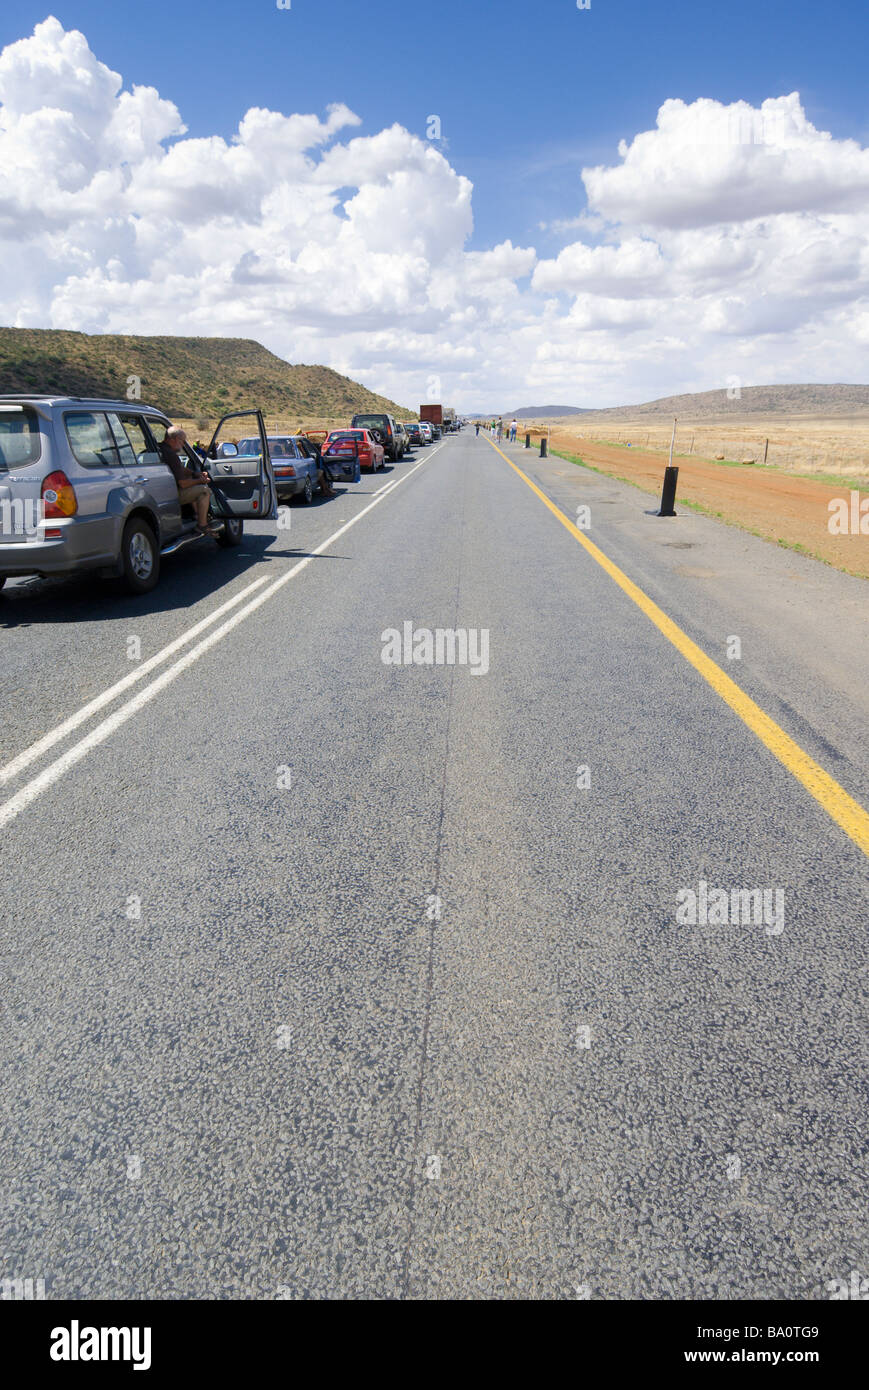 Karoo Desert traffic jam caused by roadworks and blasting on the N1 Highway between Colesburg and Bloomfontein Stock Photo